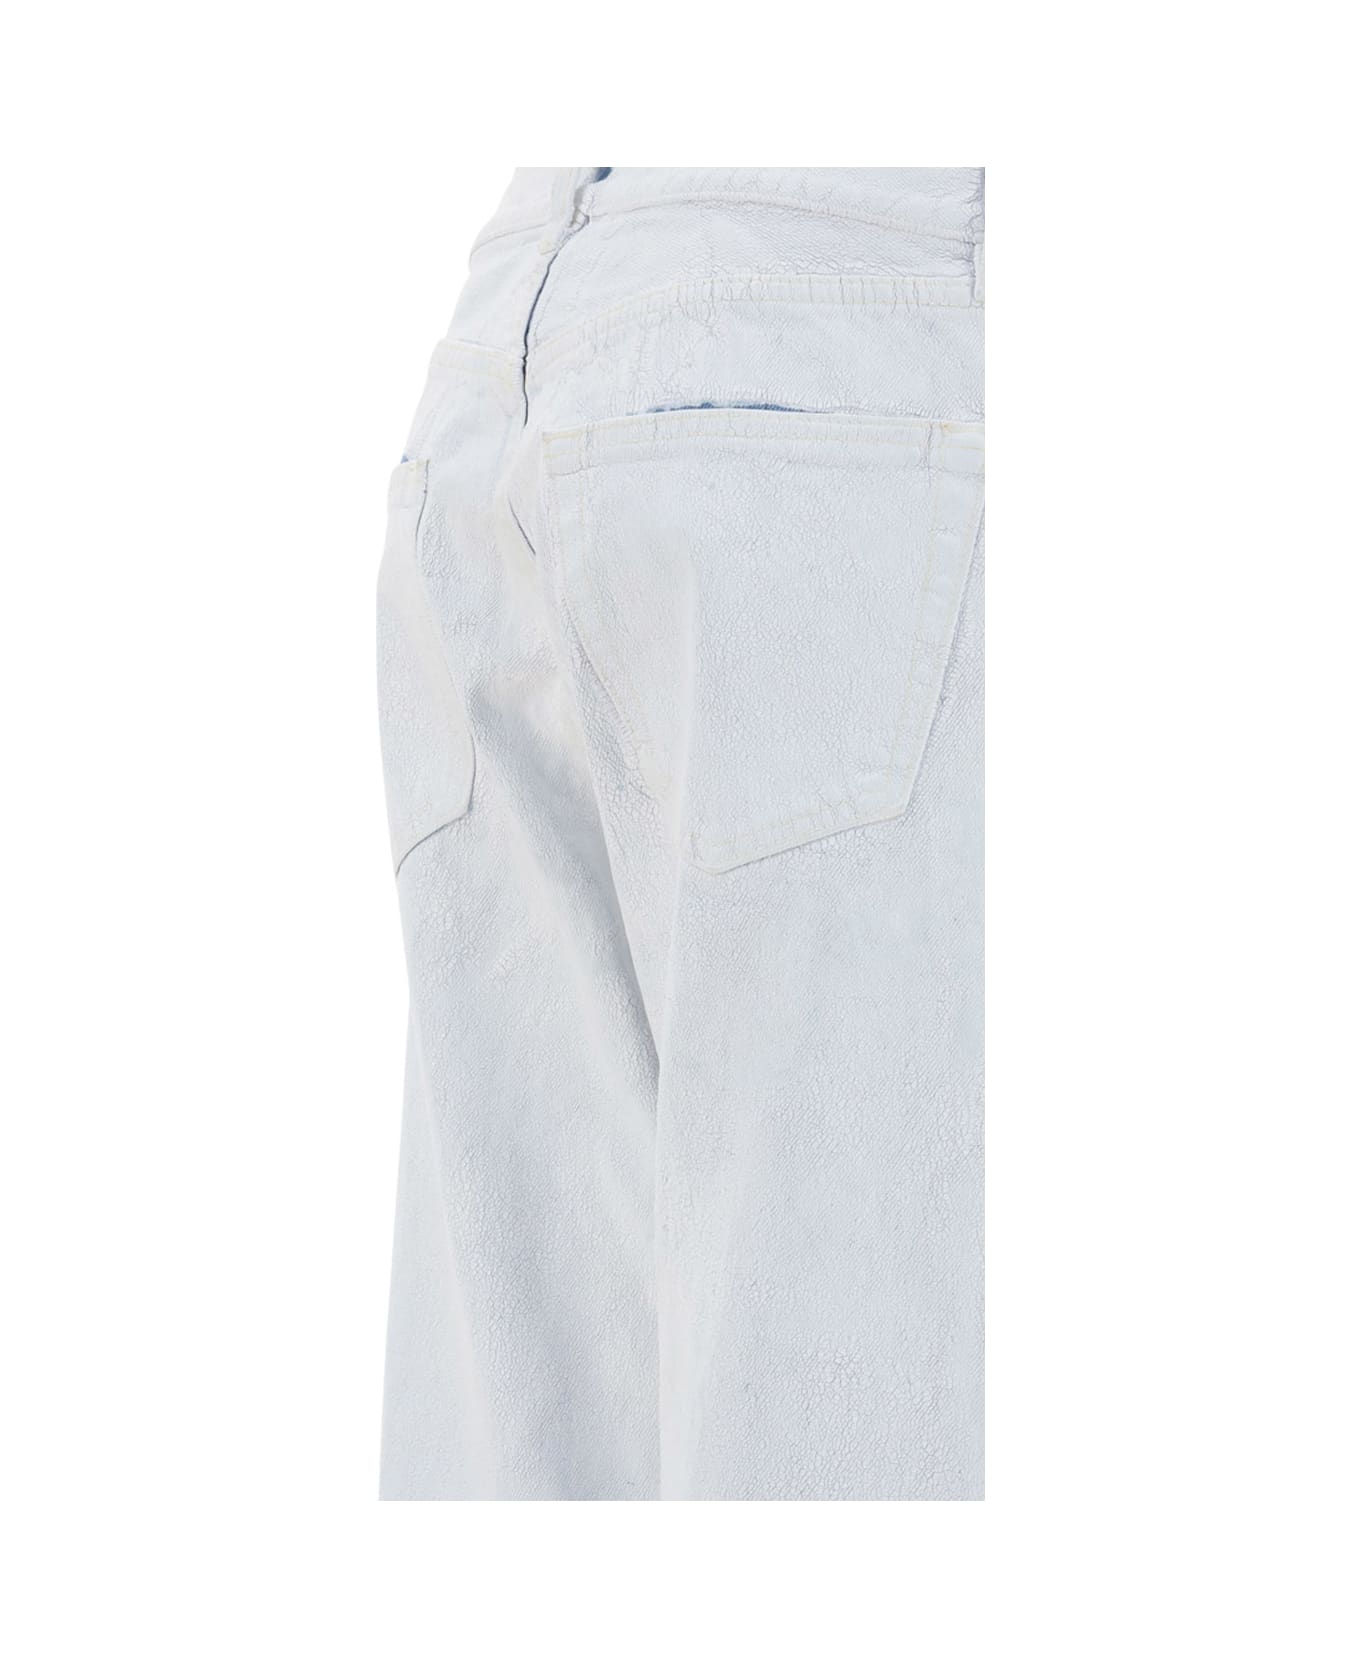 Maison Margiela Jeans - White Crack